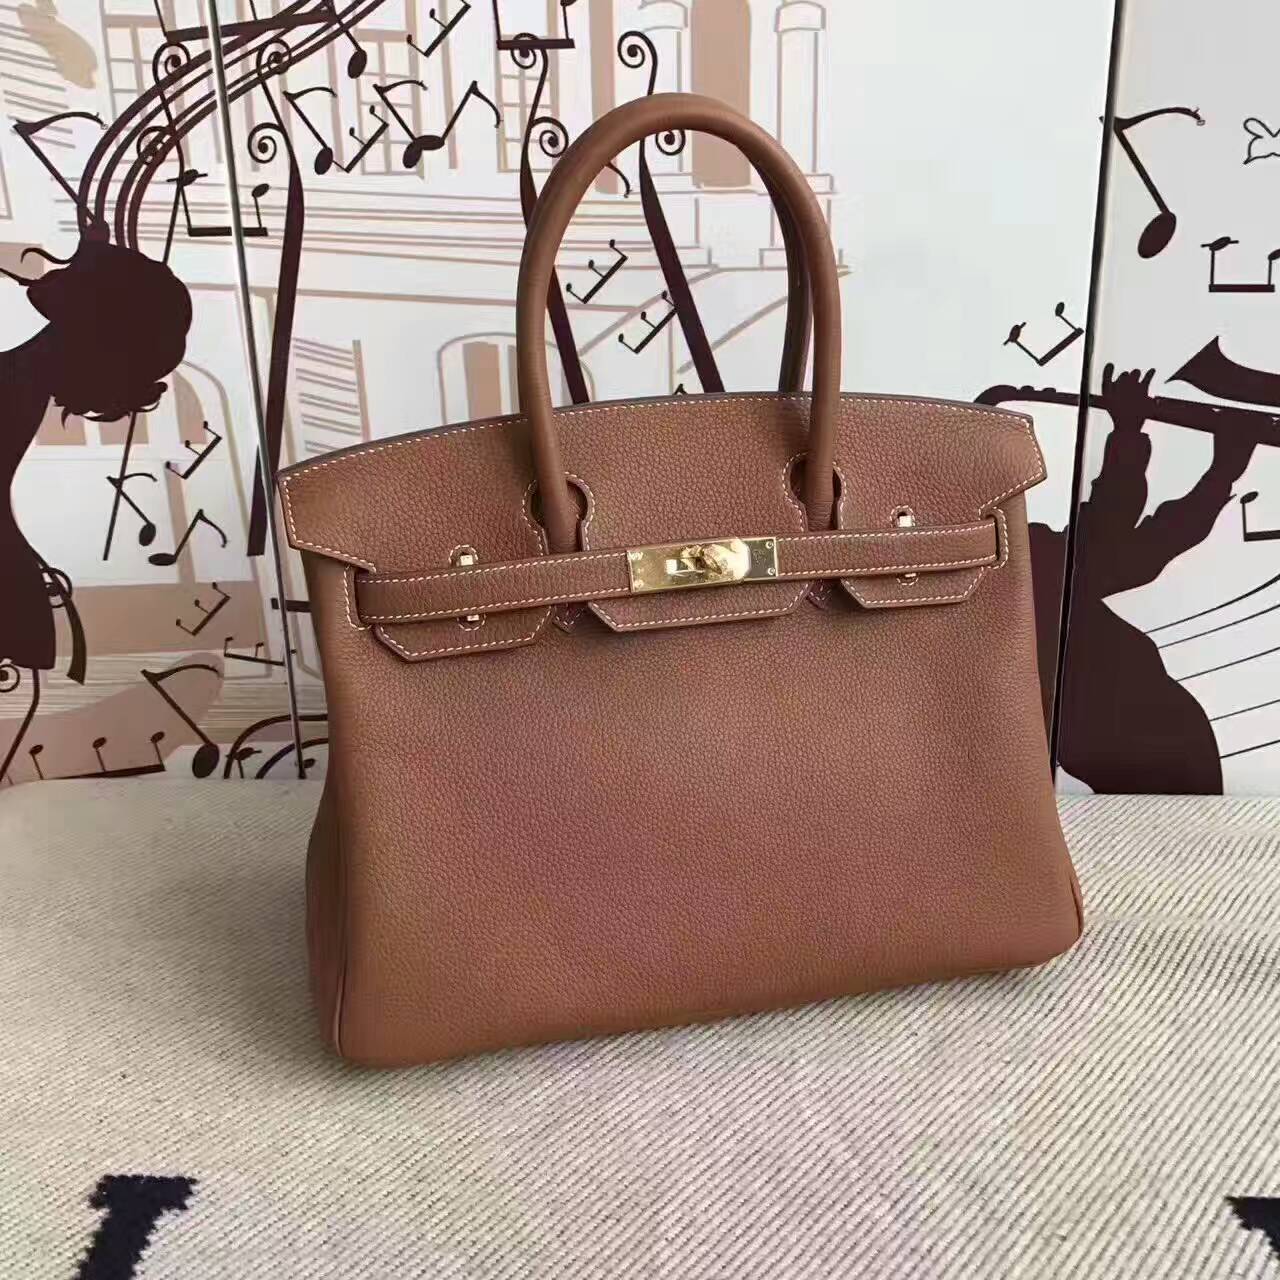 Sale Hermes CK37 Gold Togo Leather Birkin Bag 30cm Women&#8217;s Handbag